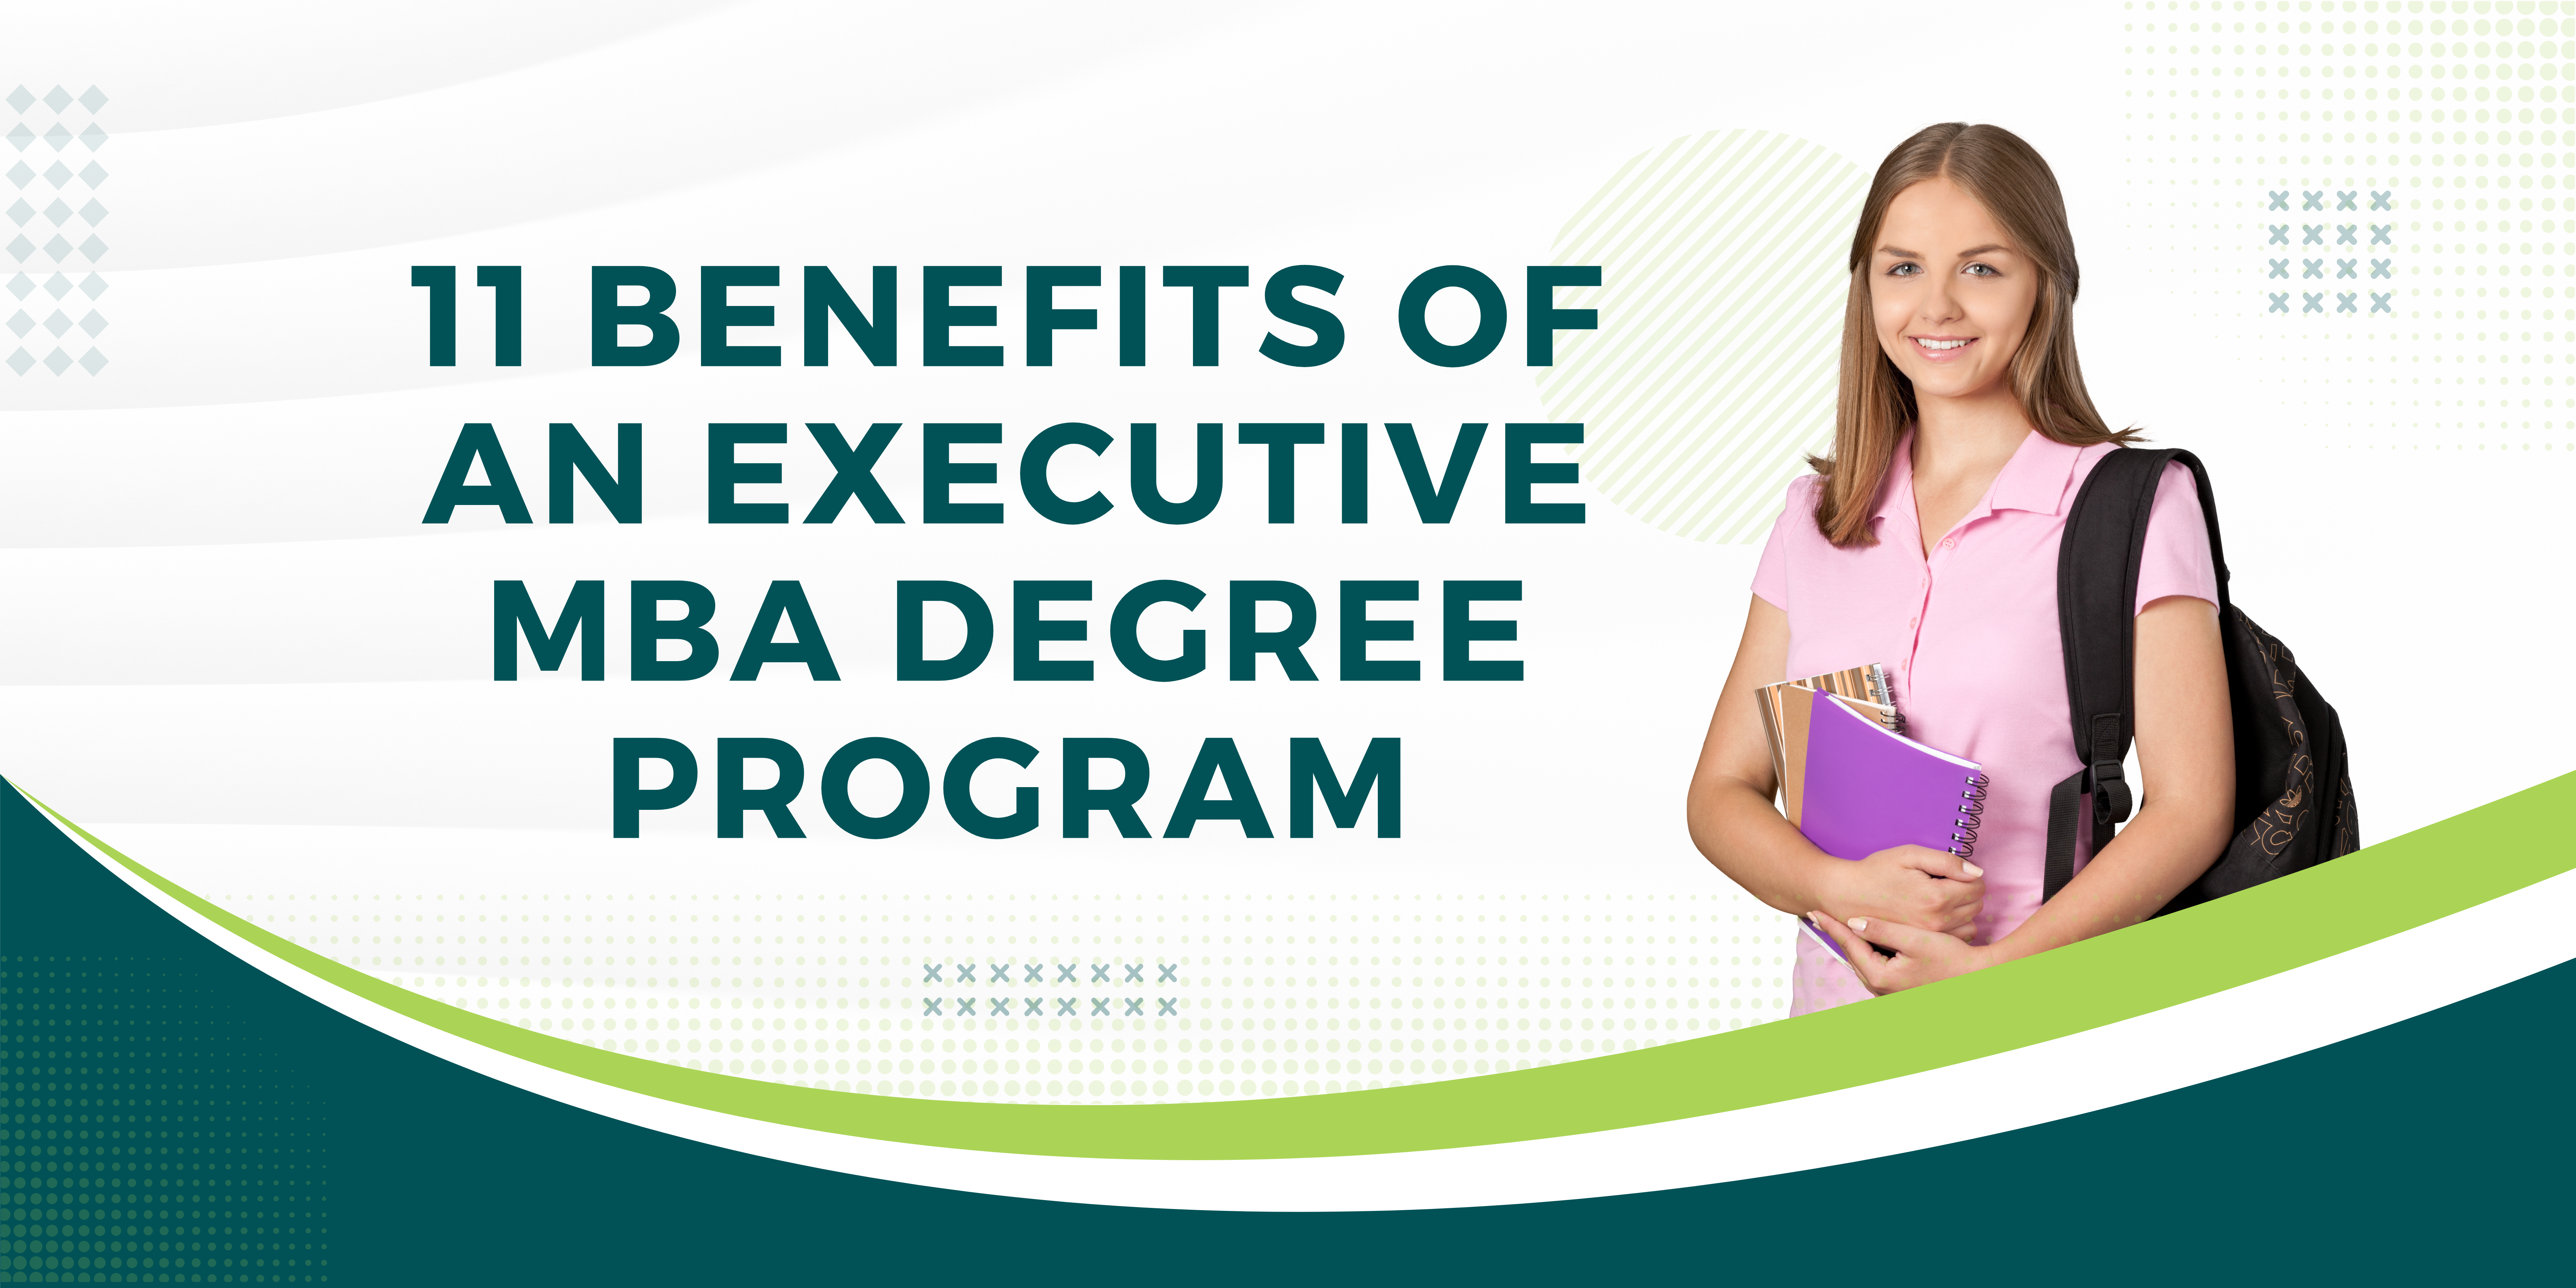 11 Benefits of an Executive MBA Degree Program